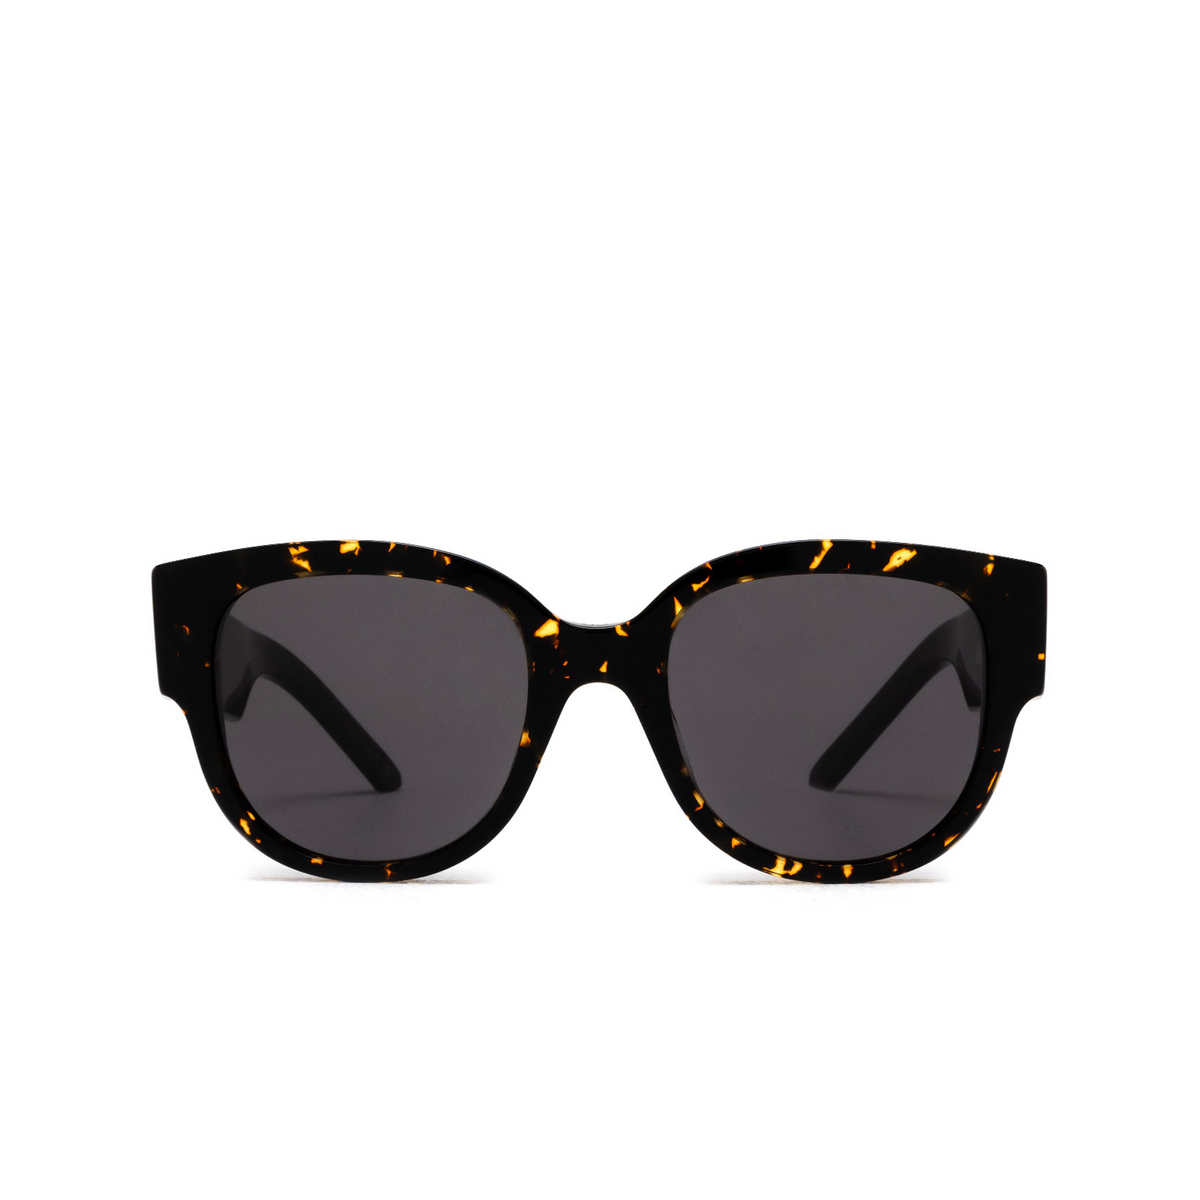 Sunglasses Dior WILDIOR BU - Mia Burton